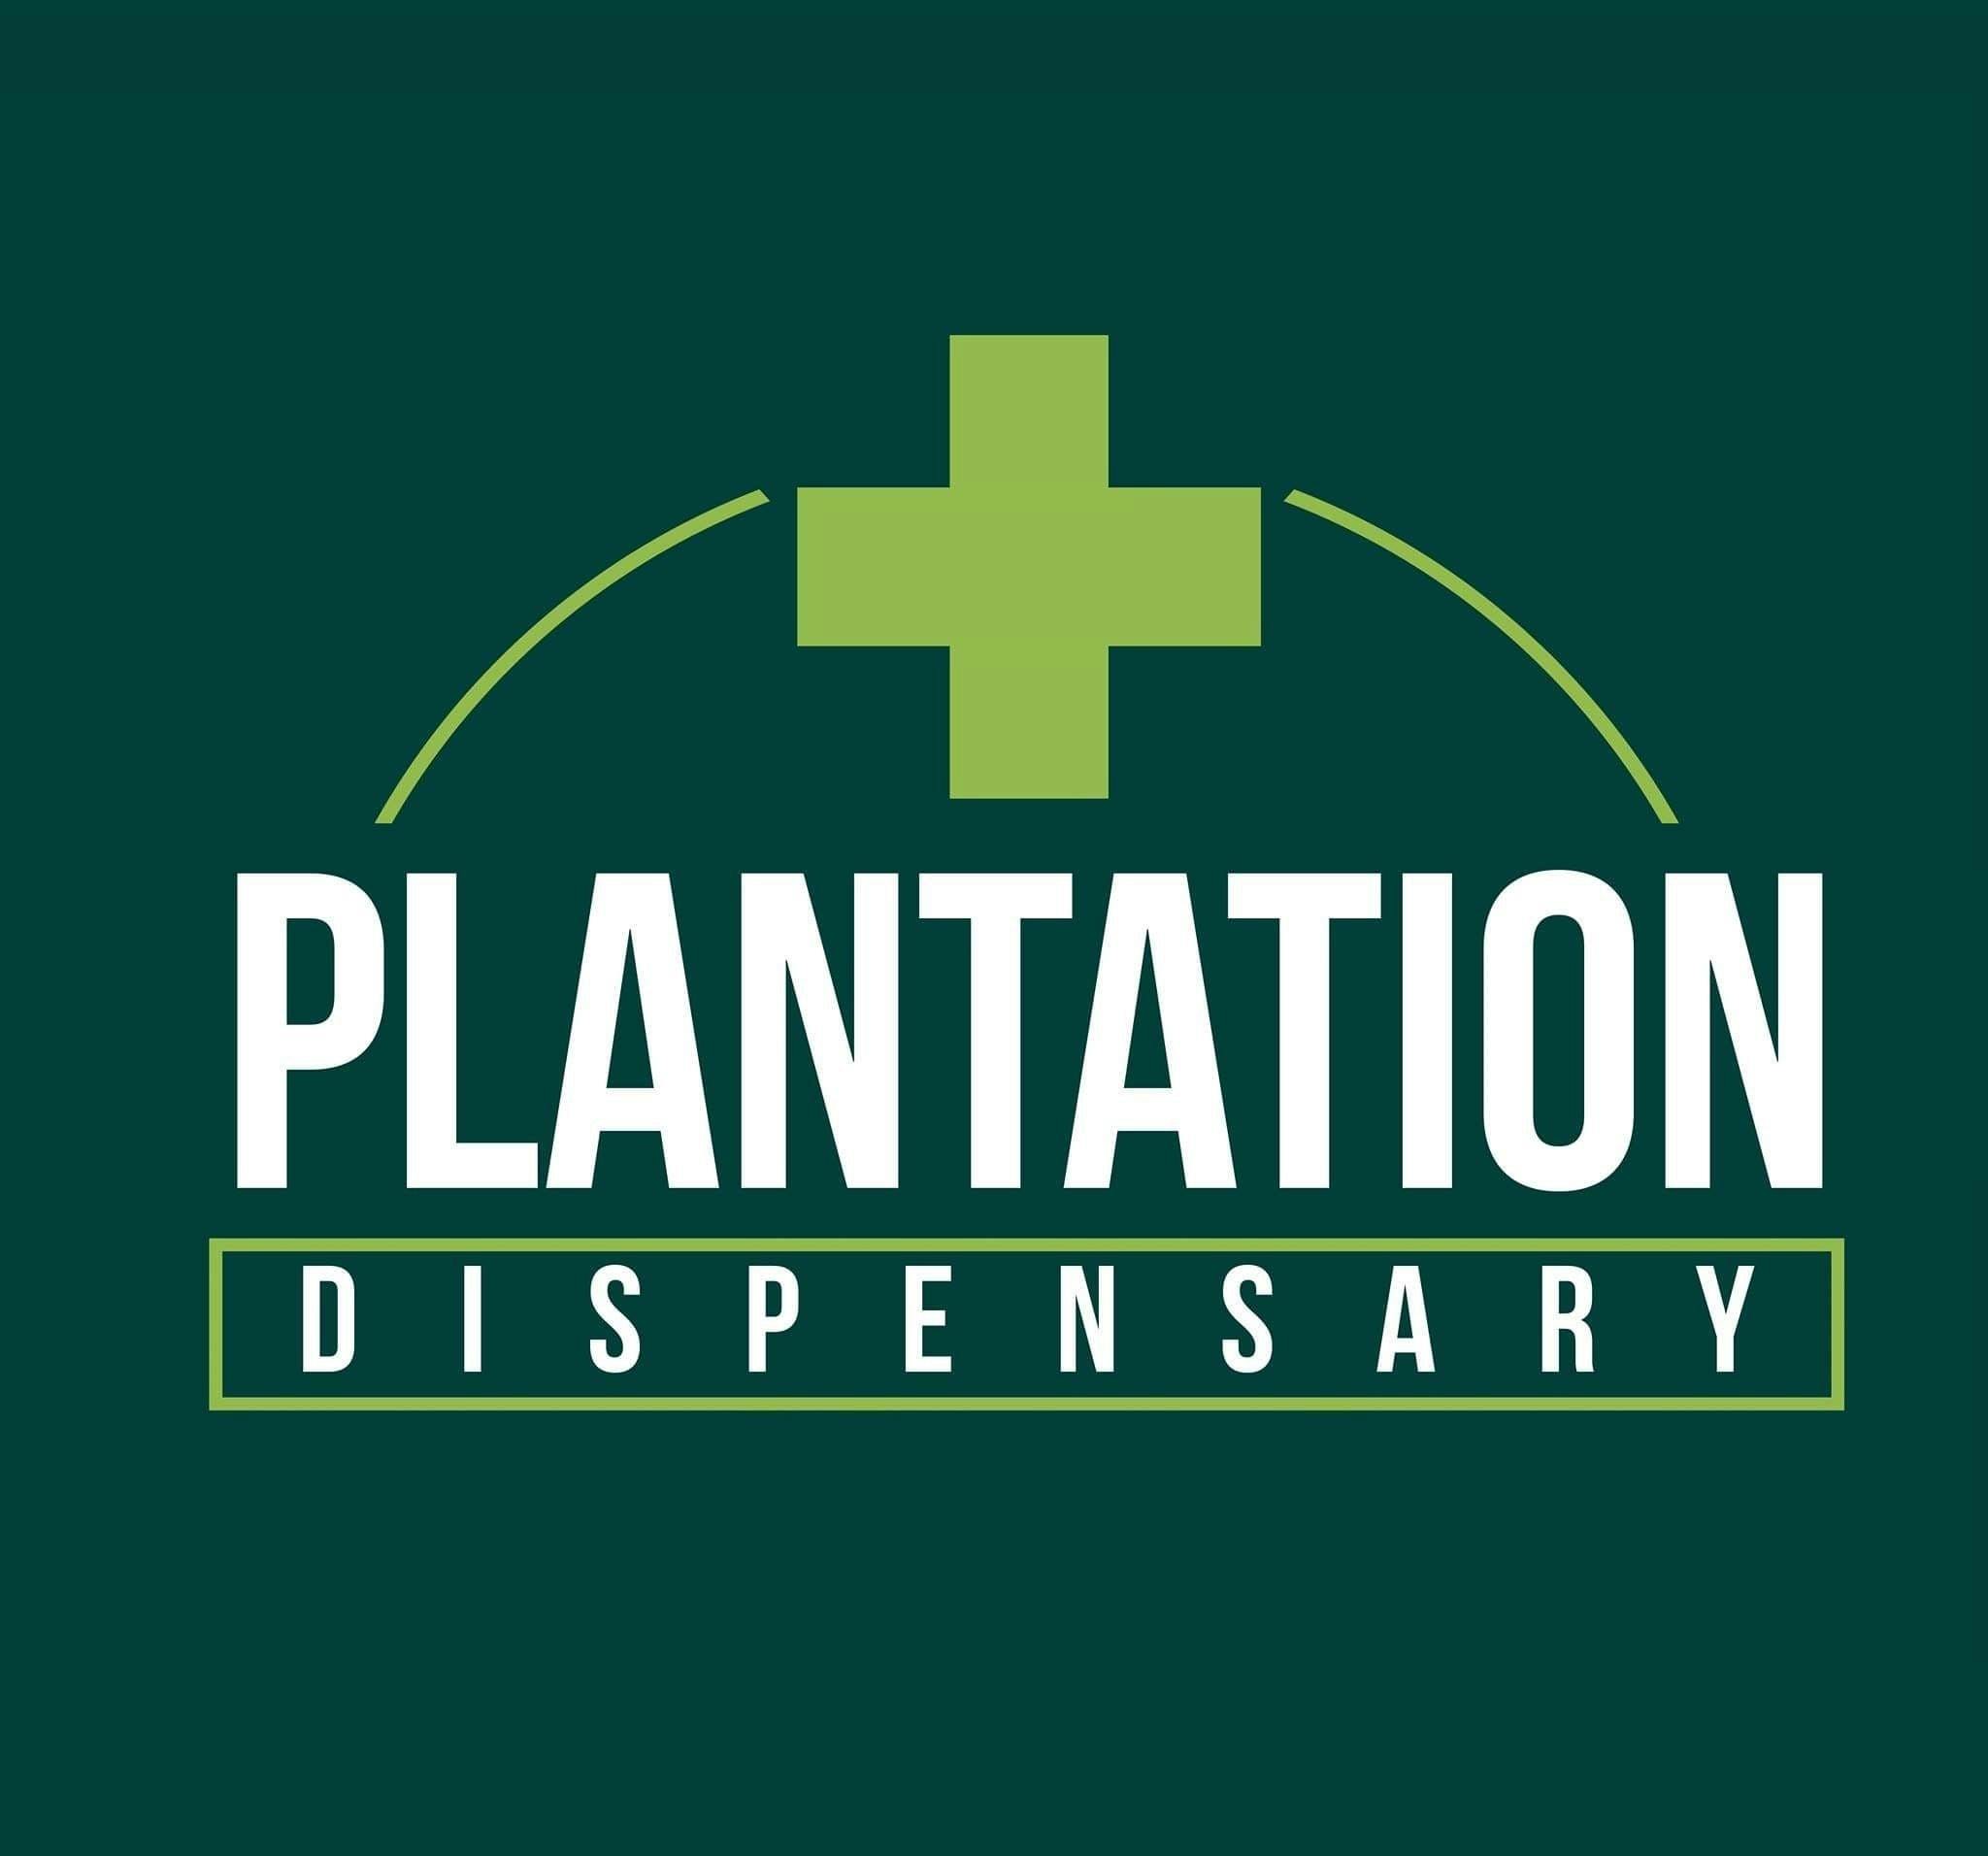 Plantation Dispensary